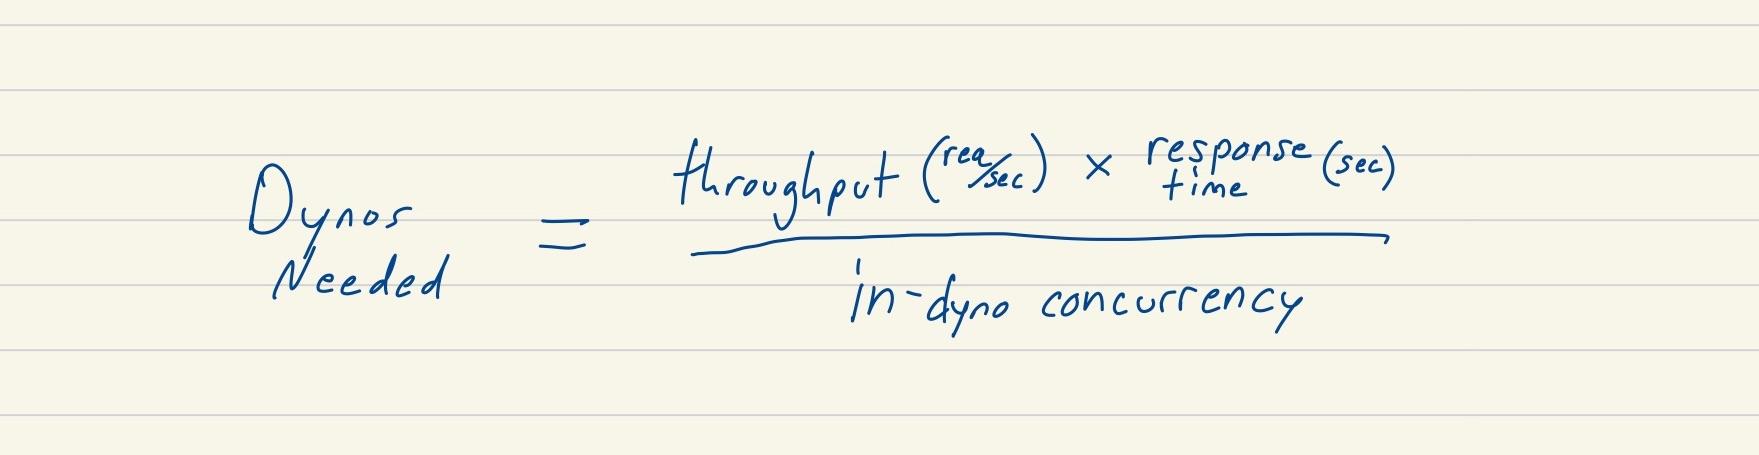 Formula for calculating dynos needed